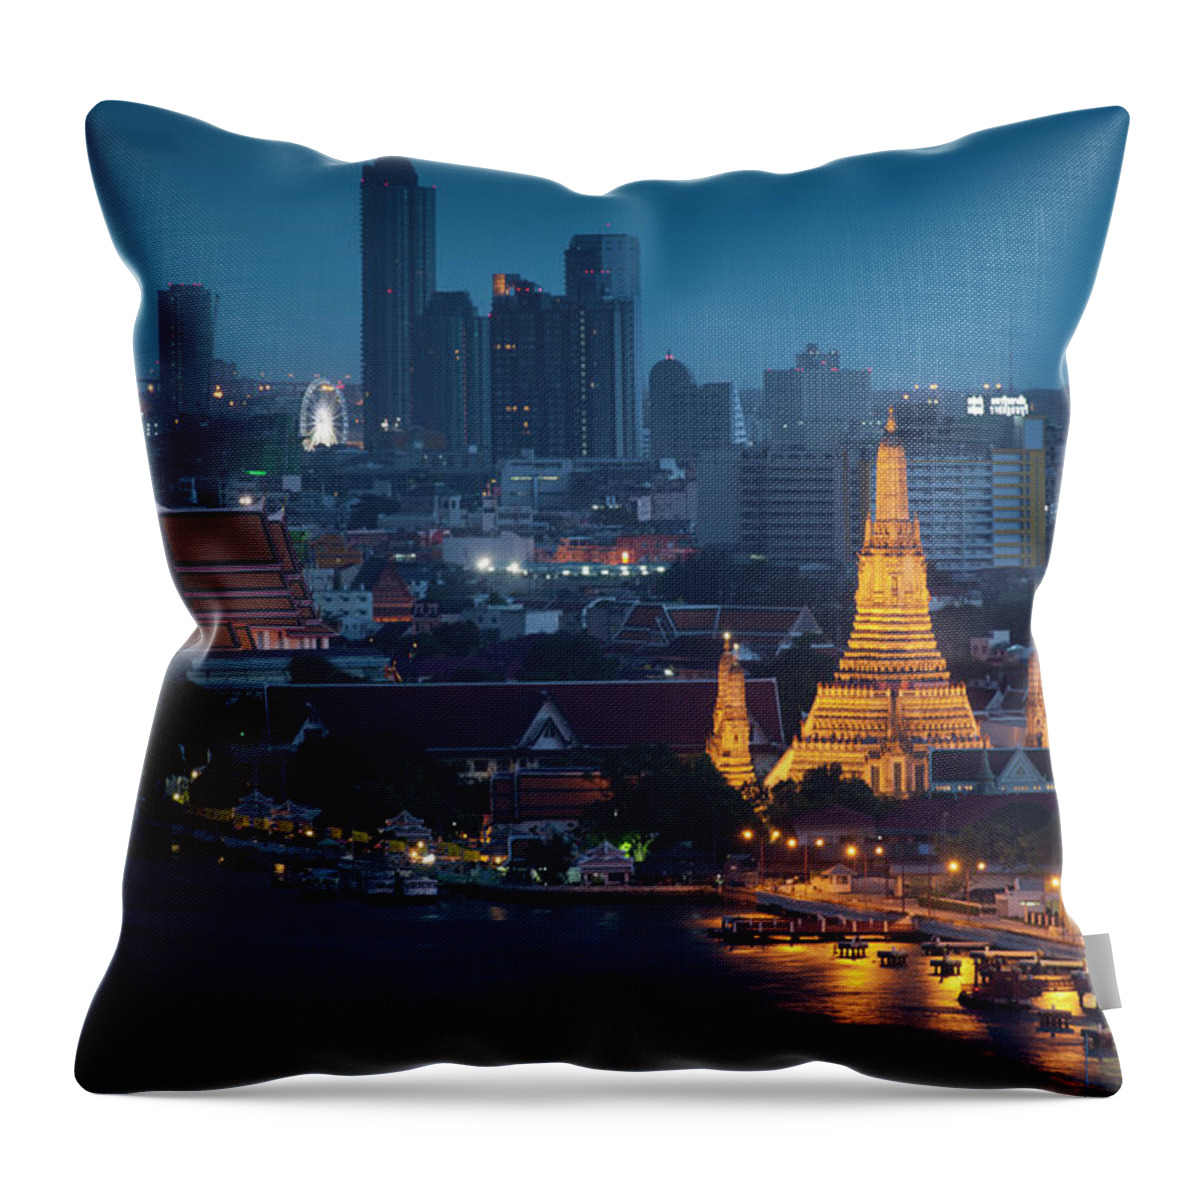 Built Structure Throw Pillow featuring the photograph Bangkok City by Watcharit Praihirun